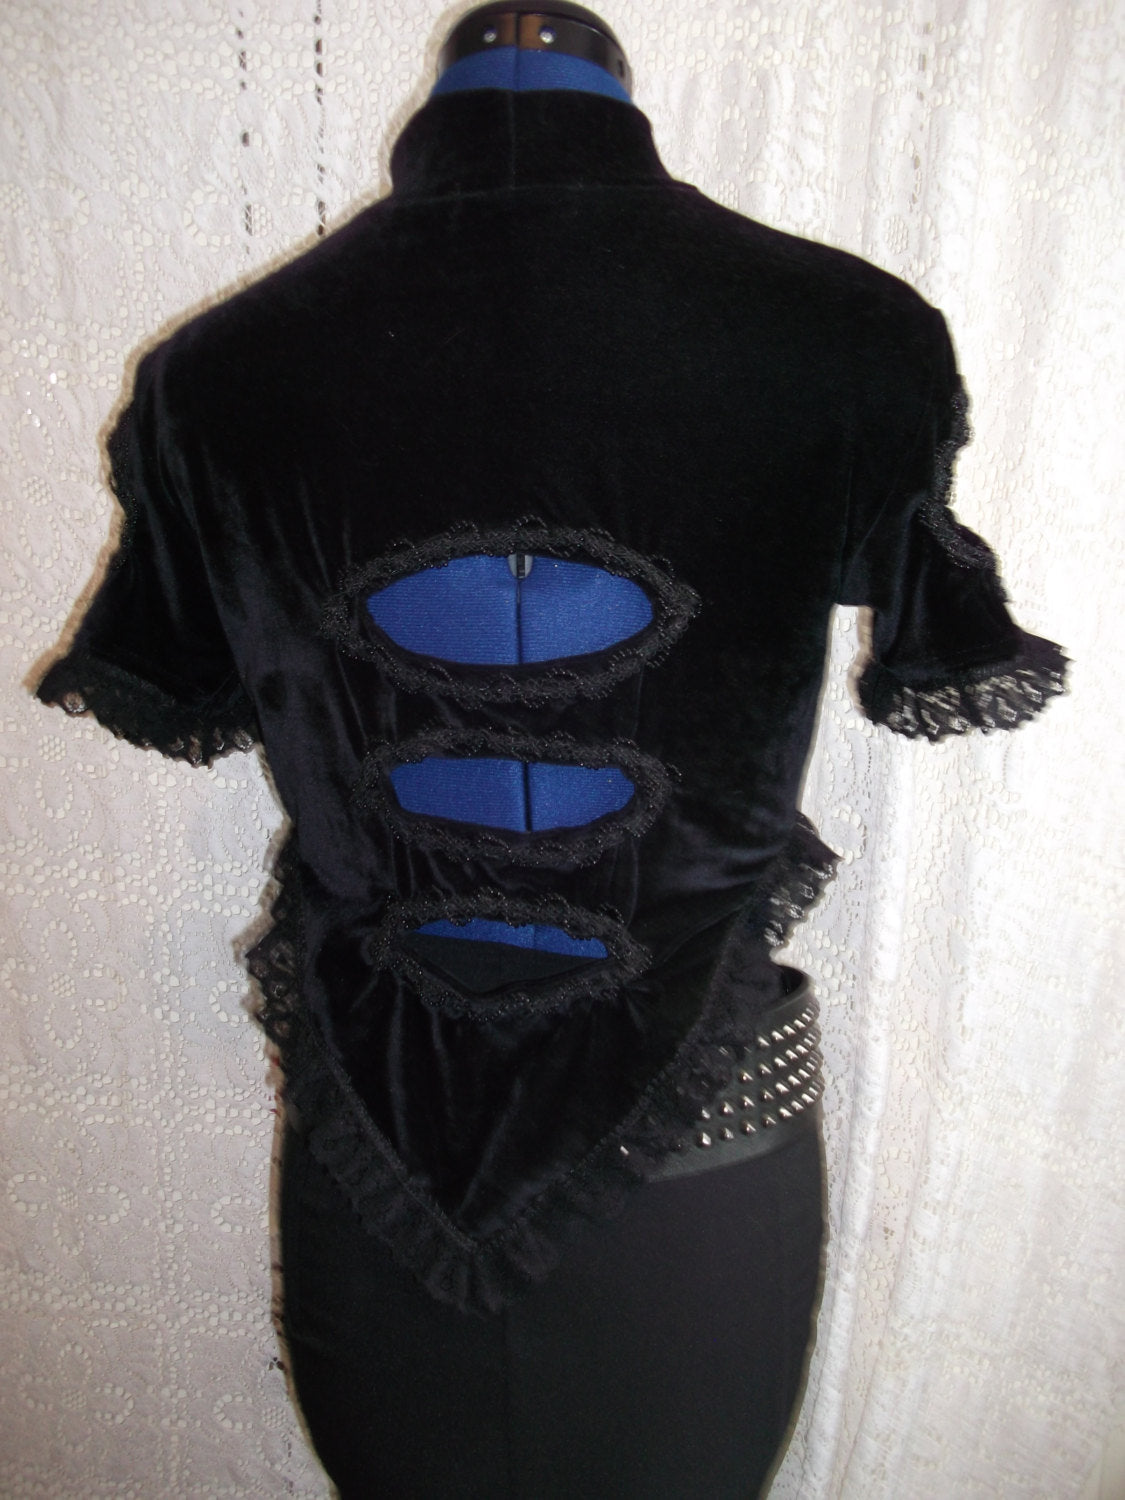 PUNK /gothROCK bespoke ORIGINAL velvet/pvc heart top. size10.cut-out back design. one off. Wonkey Donkey Bazaar